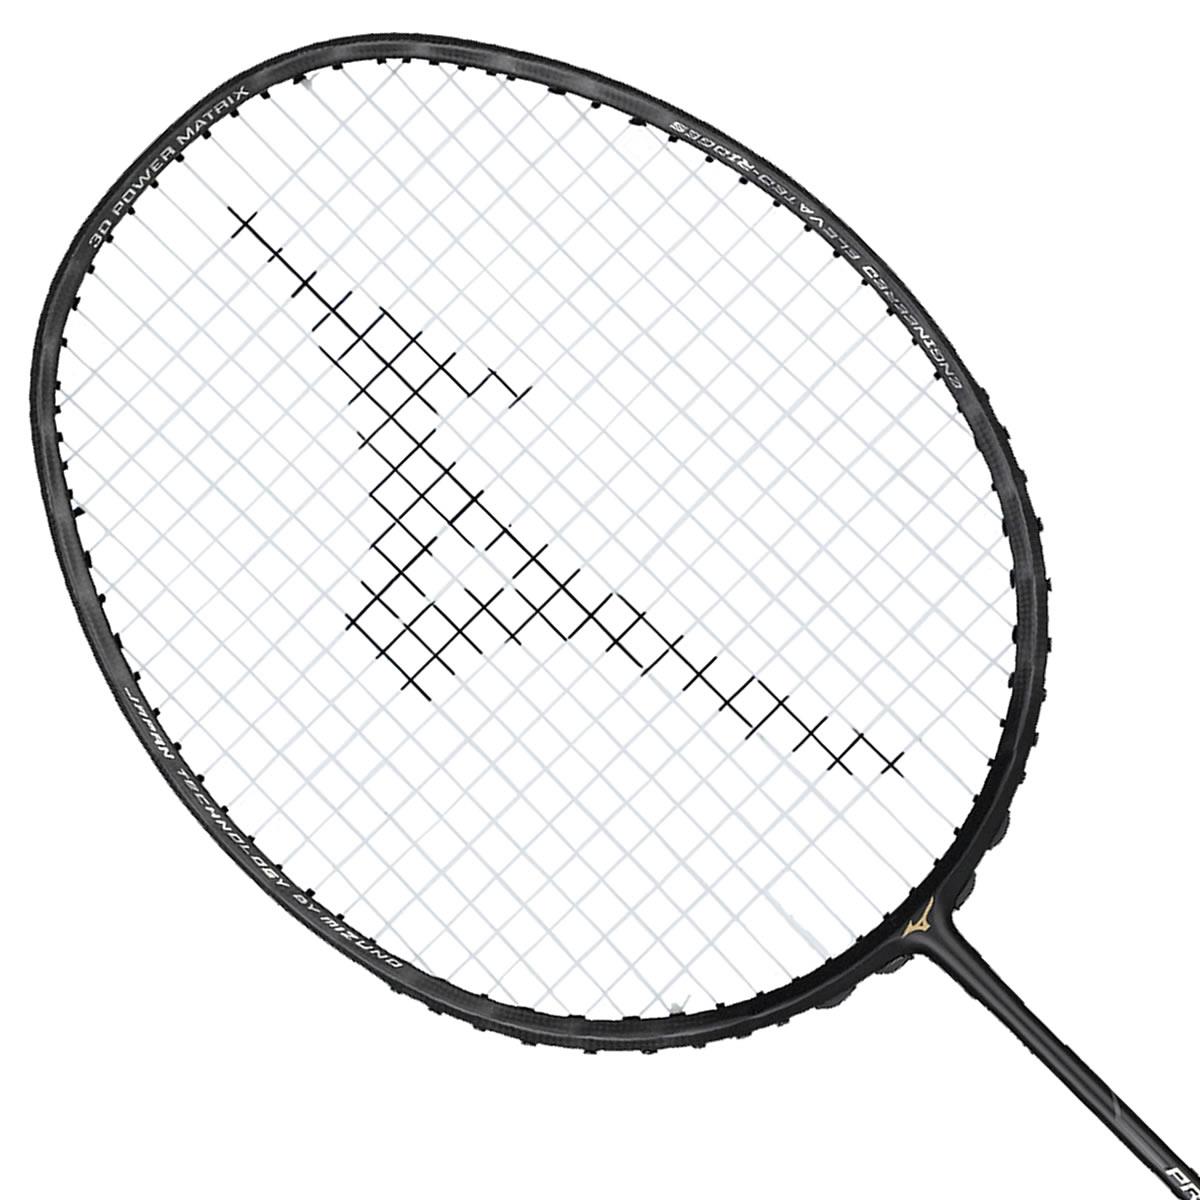 Mizuno Prototype X1 Badminton Racket